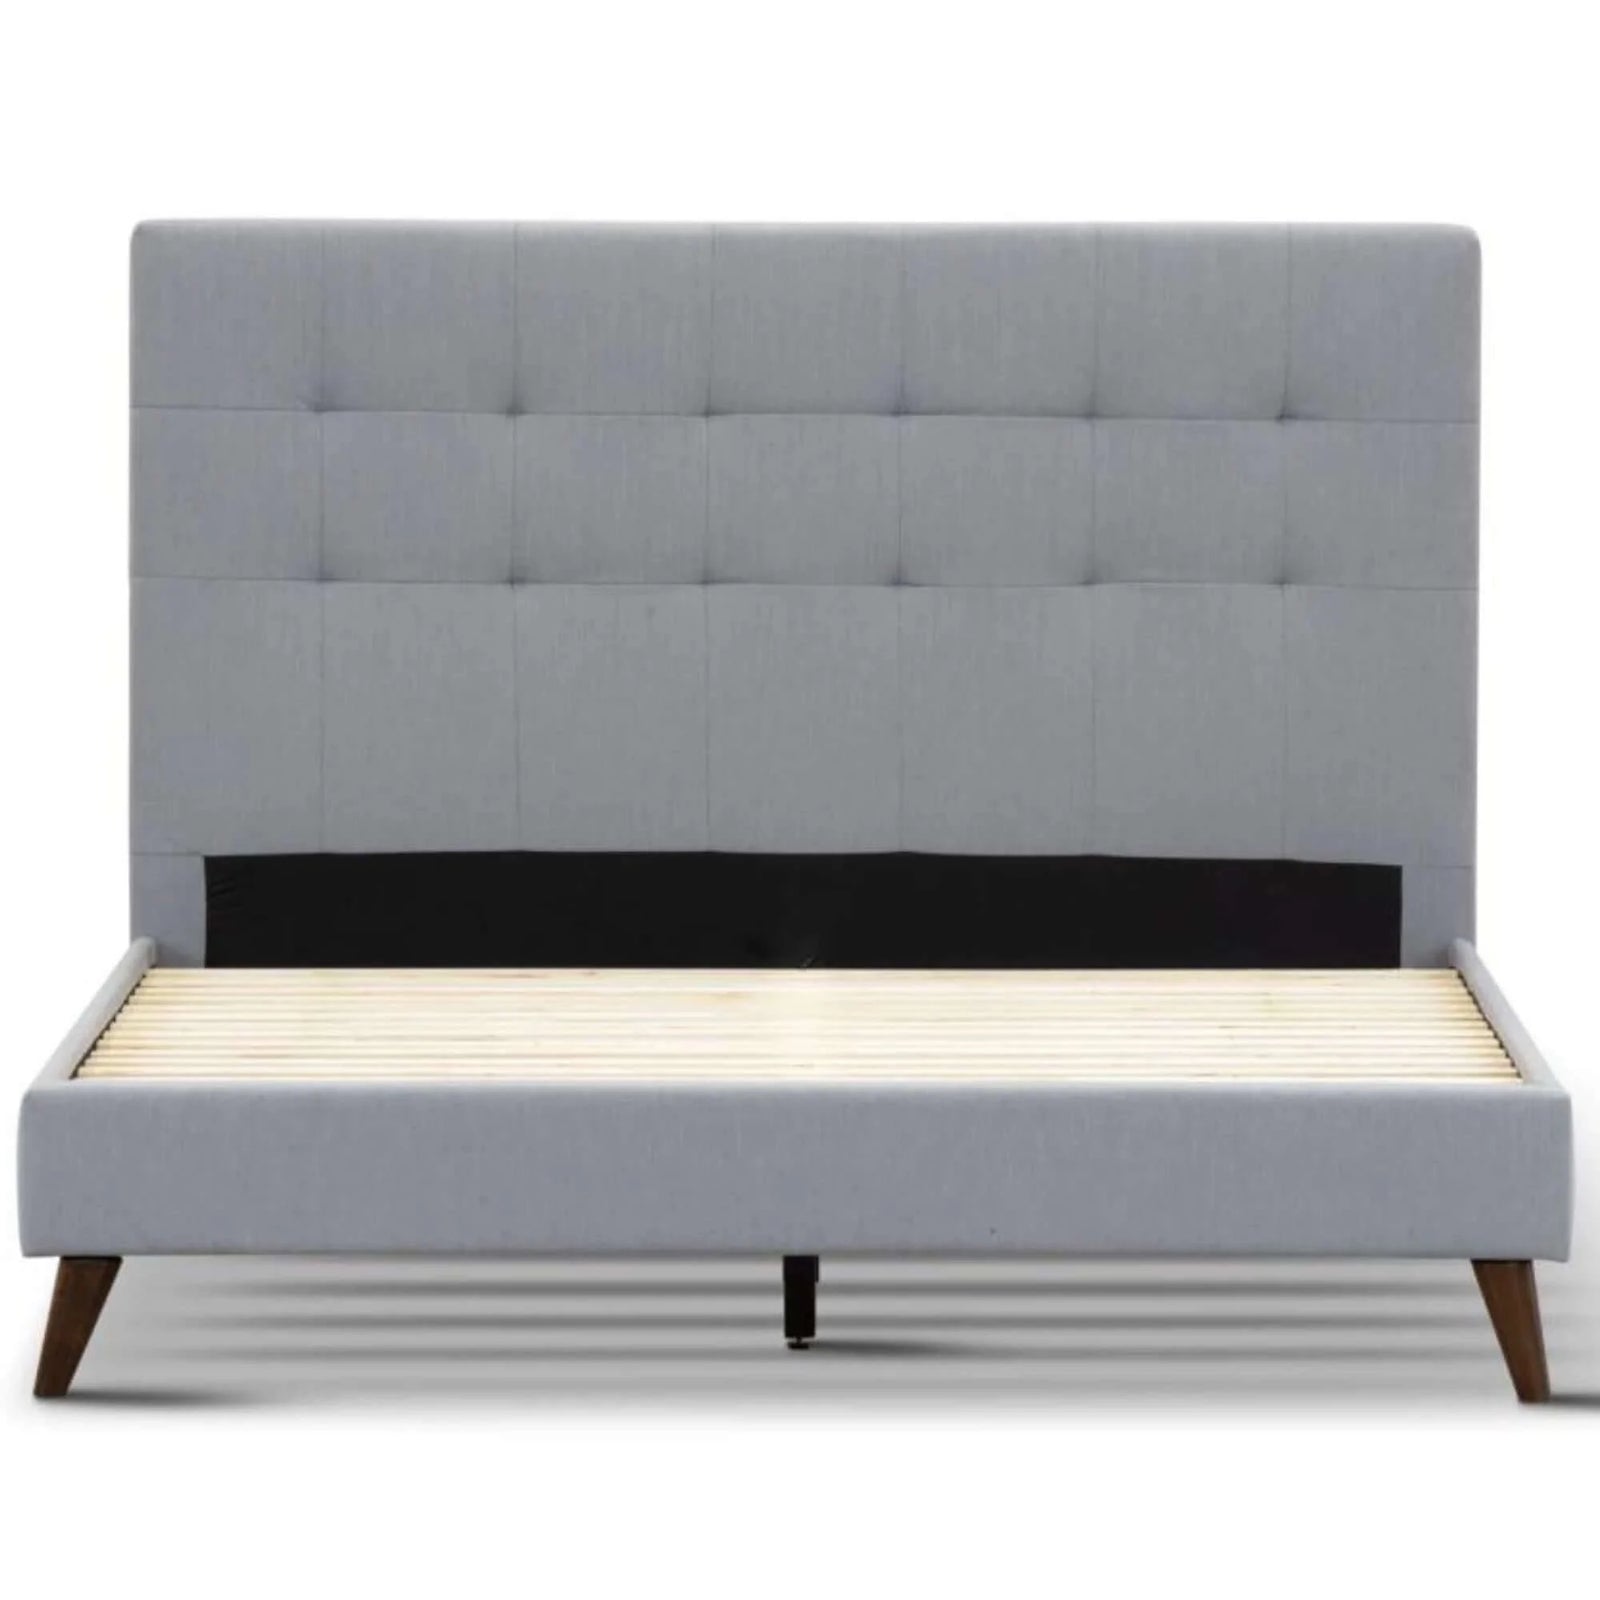 Buy volga king single bed platform frame fabric upholstered mattress base - grey - upinteriors-Upinteriors